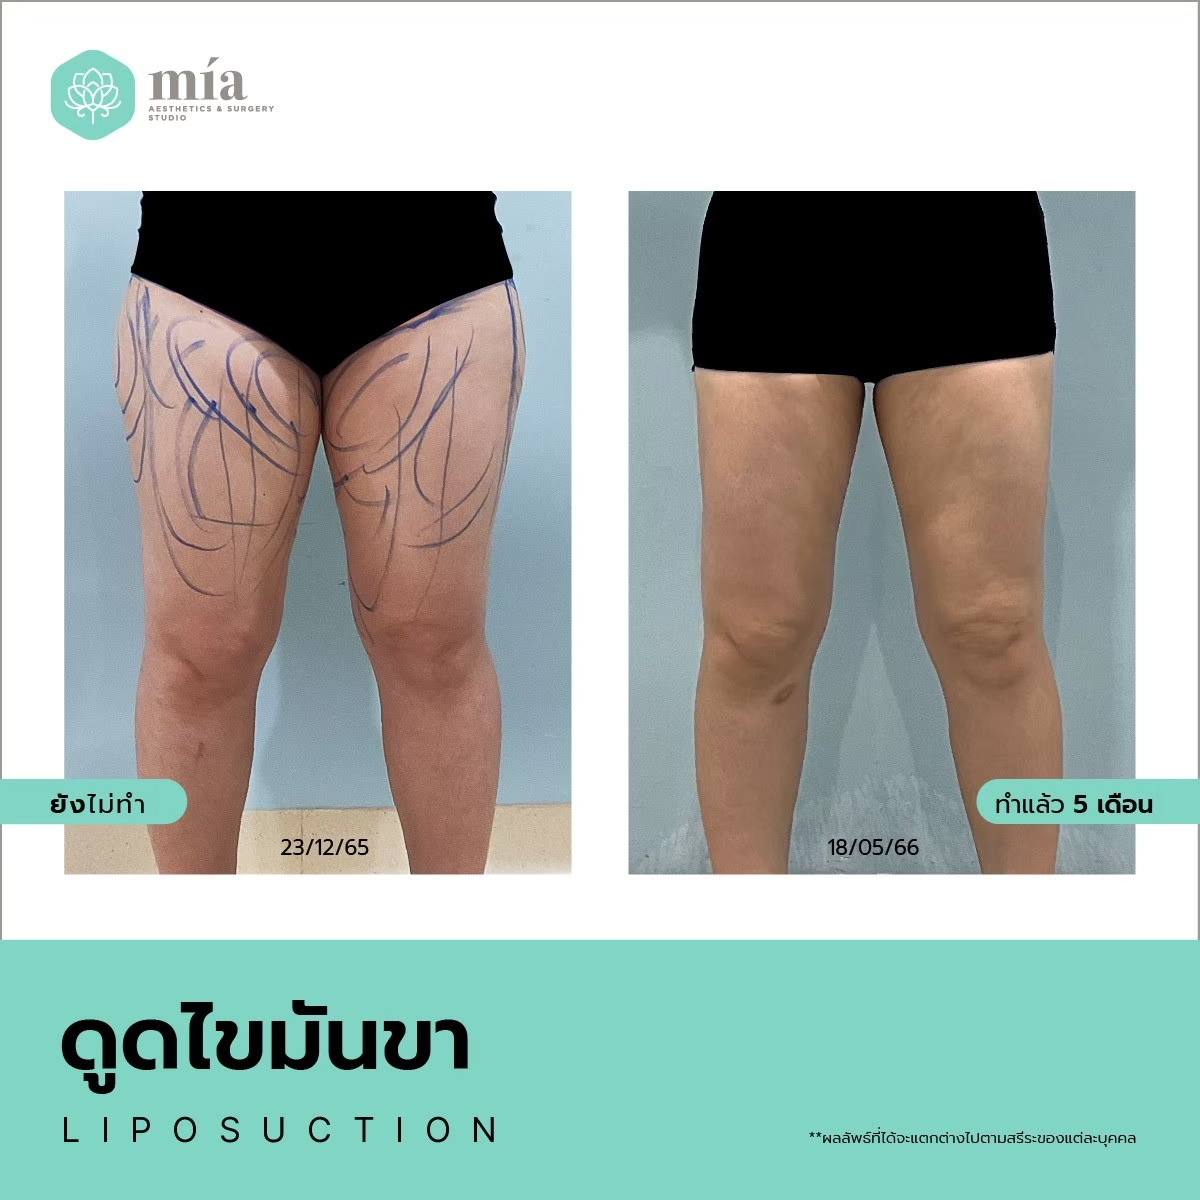 thigh liposuction  sculpting legs for a sleeker look